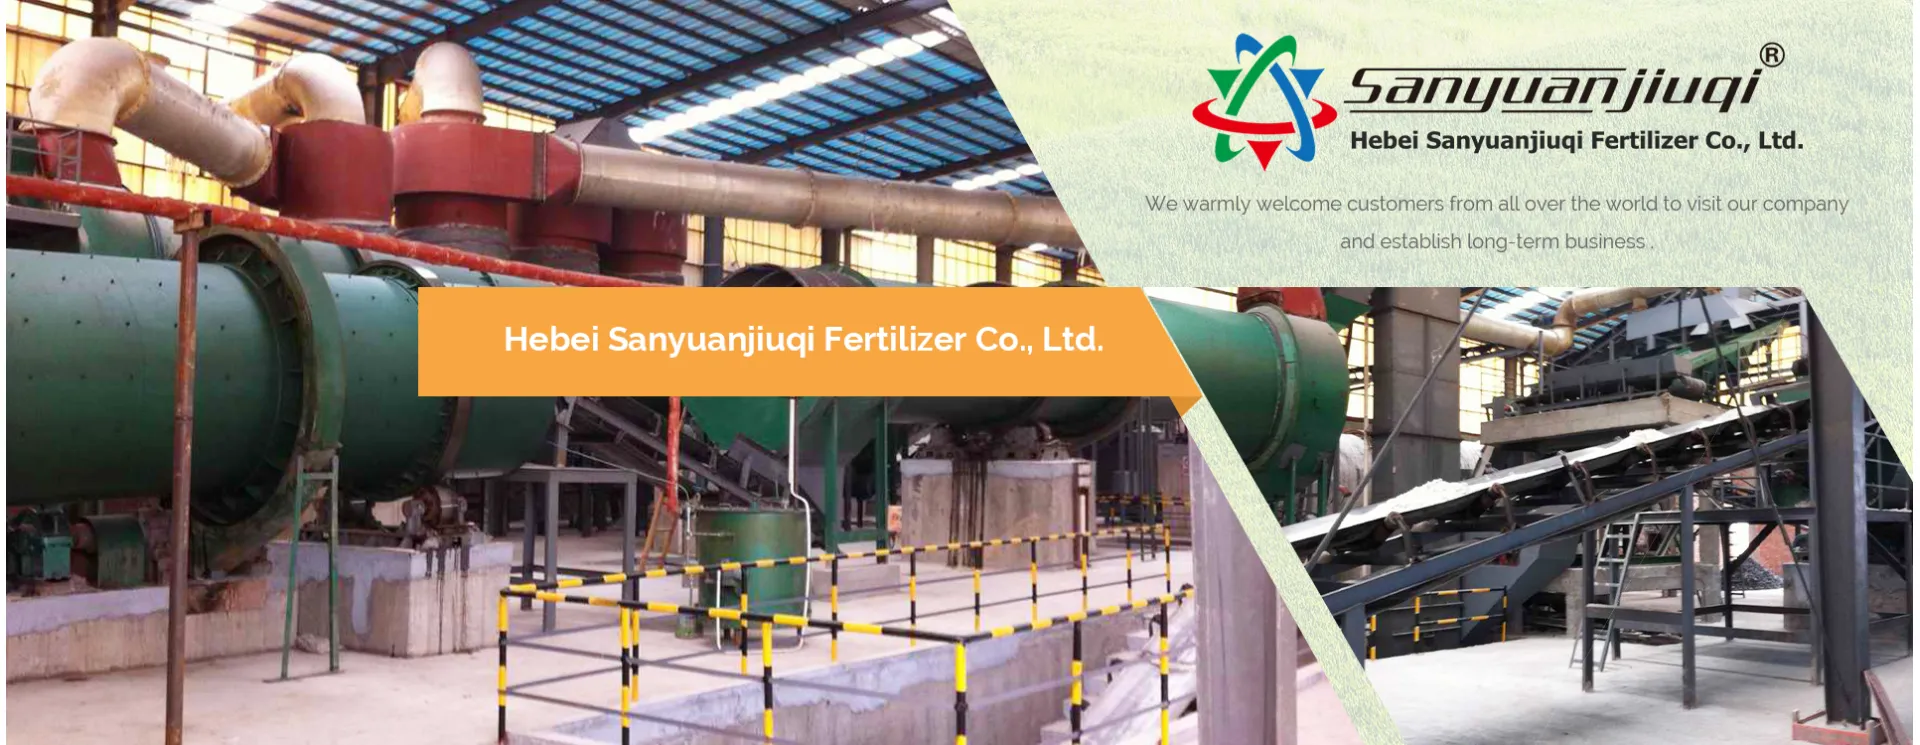 Hebei Sanyuanjiuqi Fertilizer Co., Ltd.